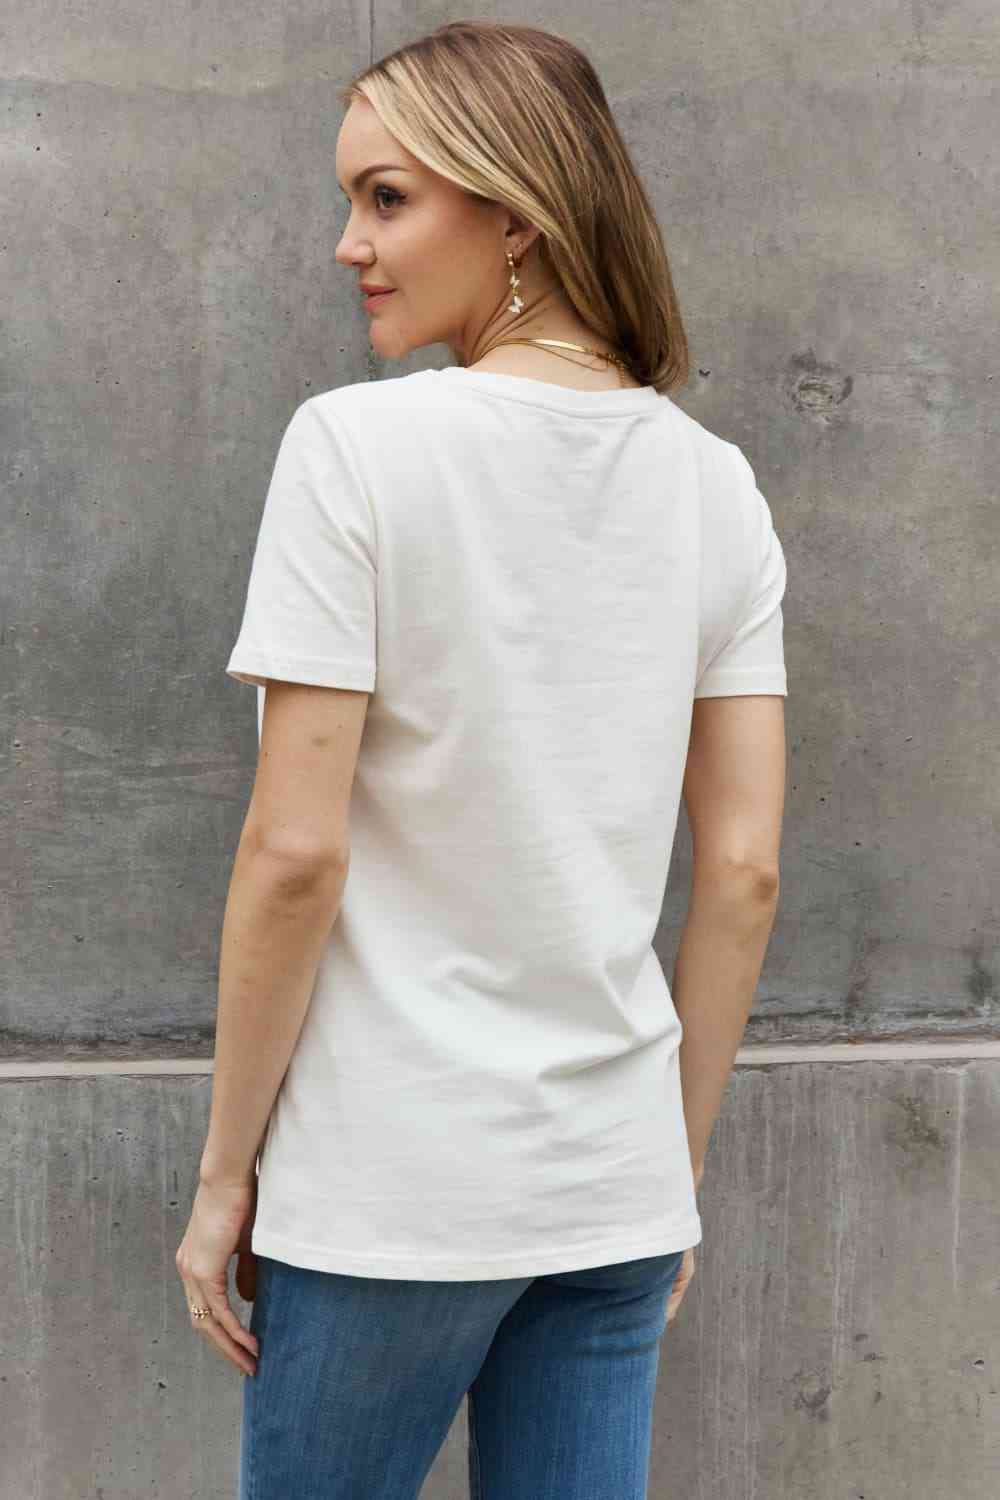 WINOSAUR Graphic Cotton T-Shirt - T-Shirts - Shirts & Tops - 12 - 2024